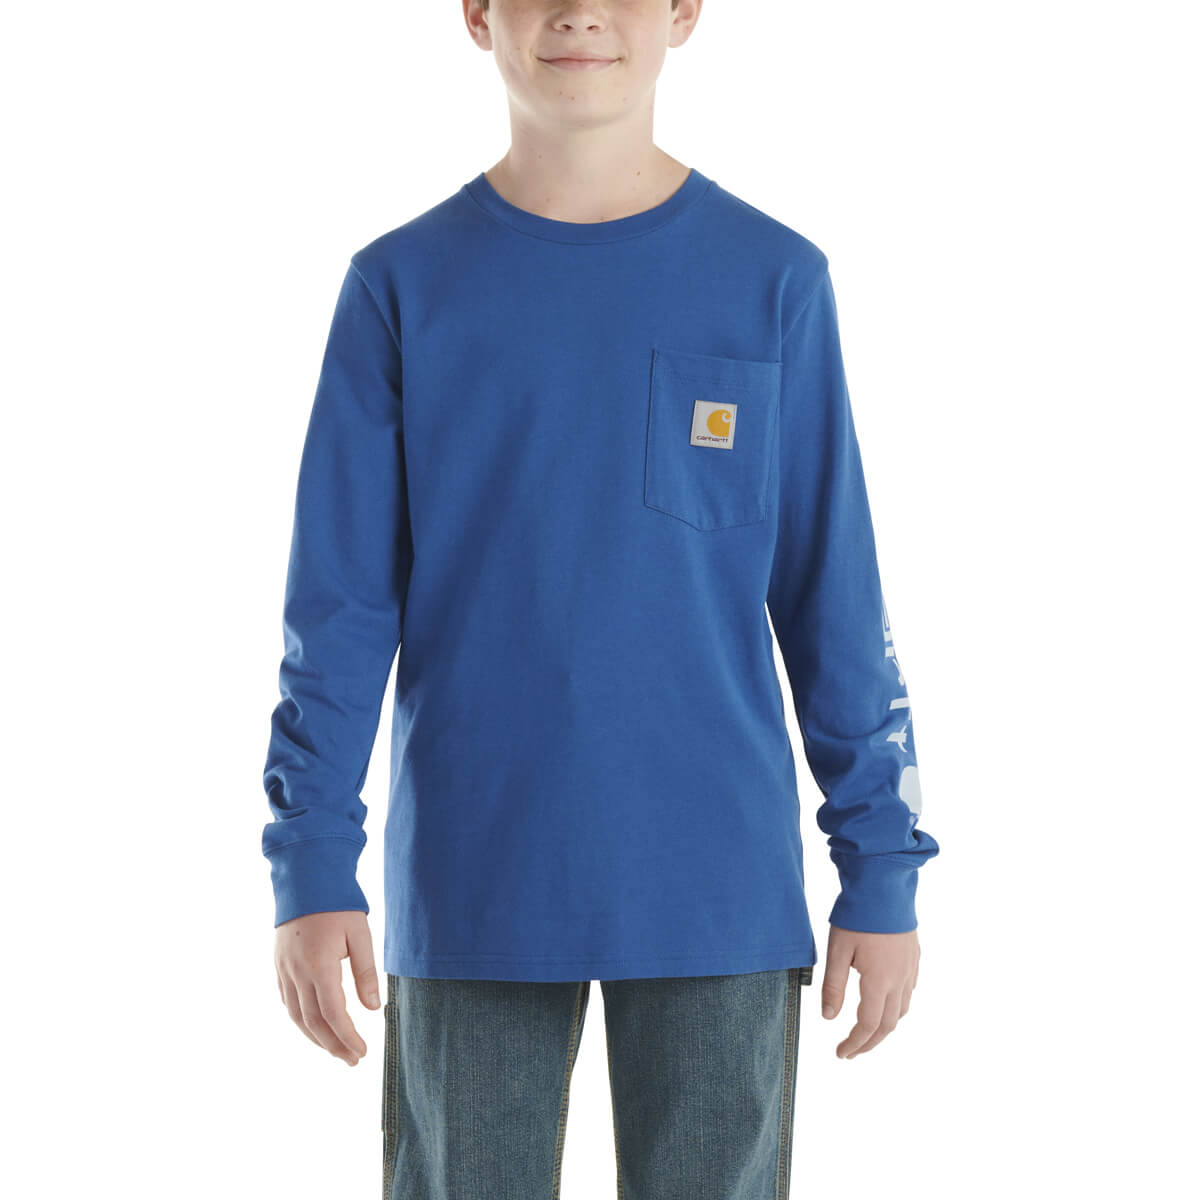 Carhartt Kid's Long Sleeve Graphic Pocket T-Shirt - Galaxy Blue